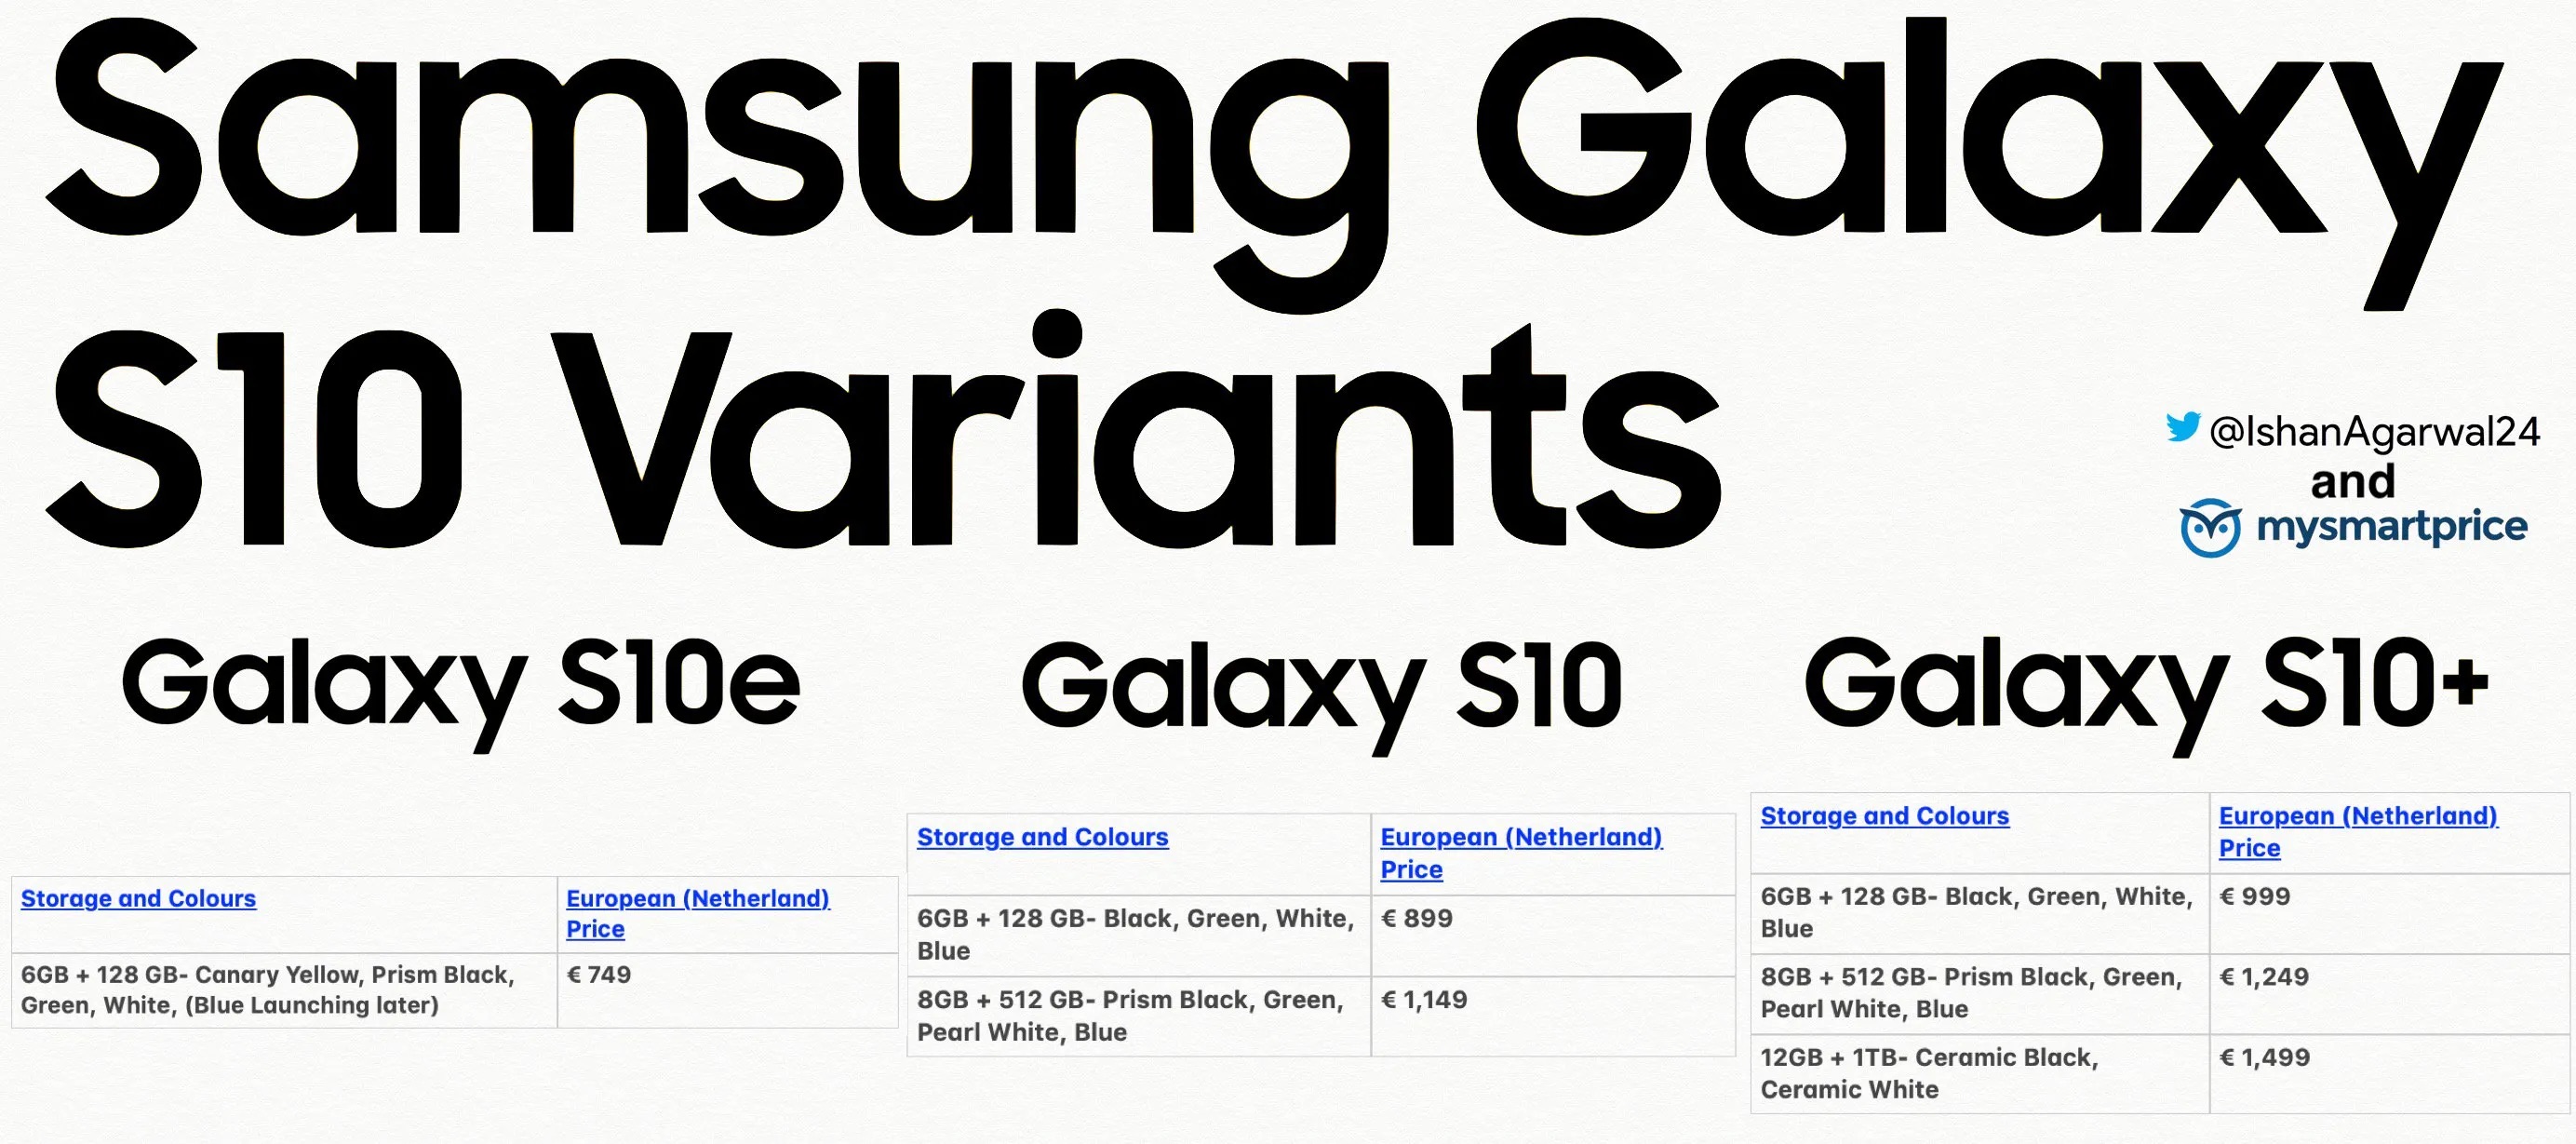 samsung galaxy s10 pricing 2 cbwdis